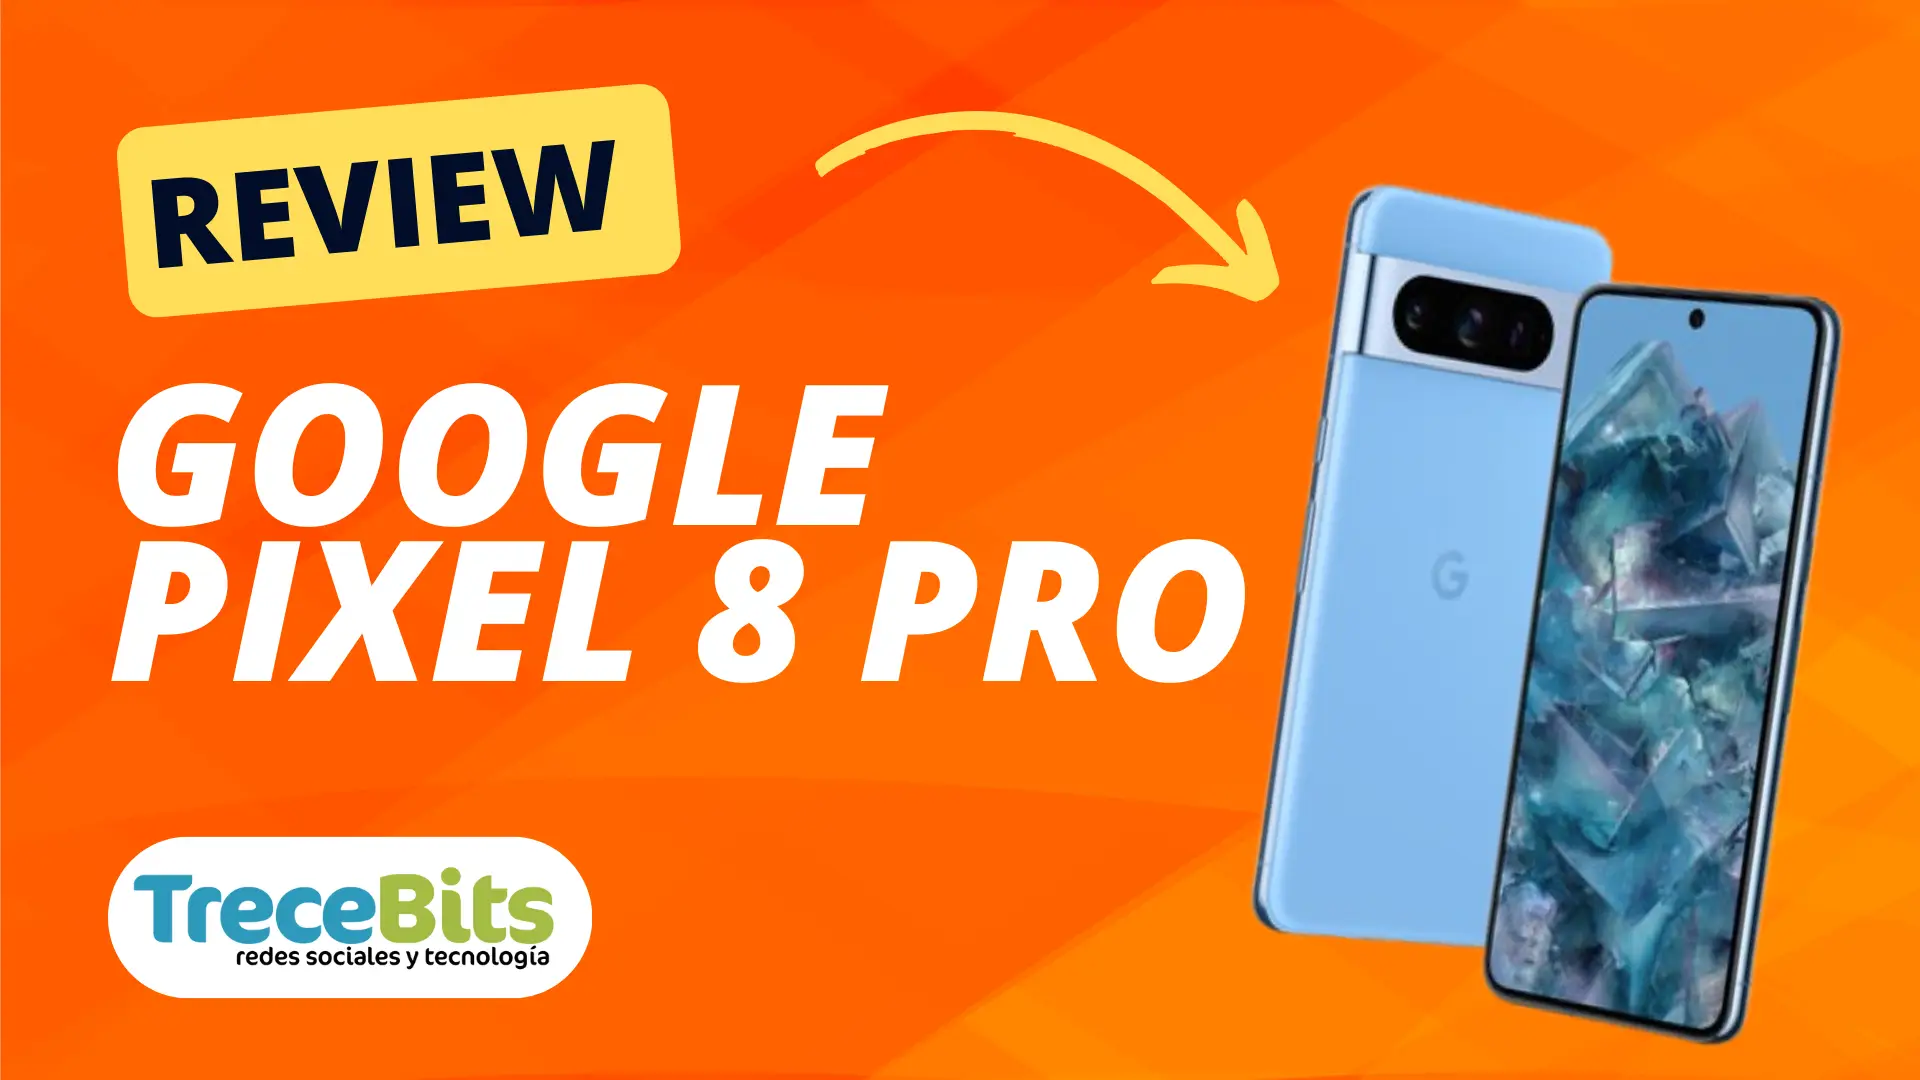 Review Google Pixel 8 Pro